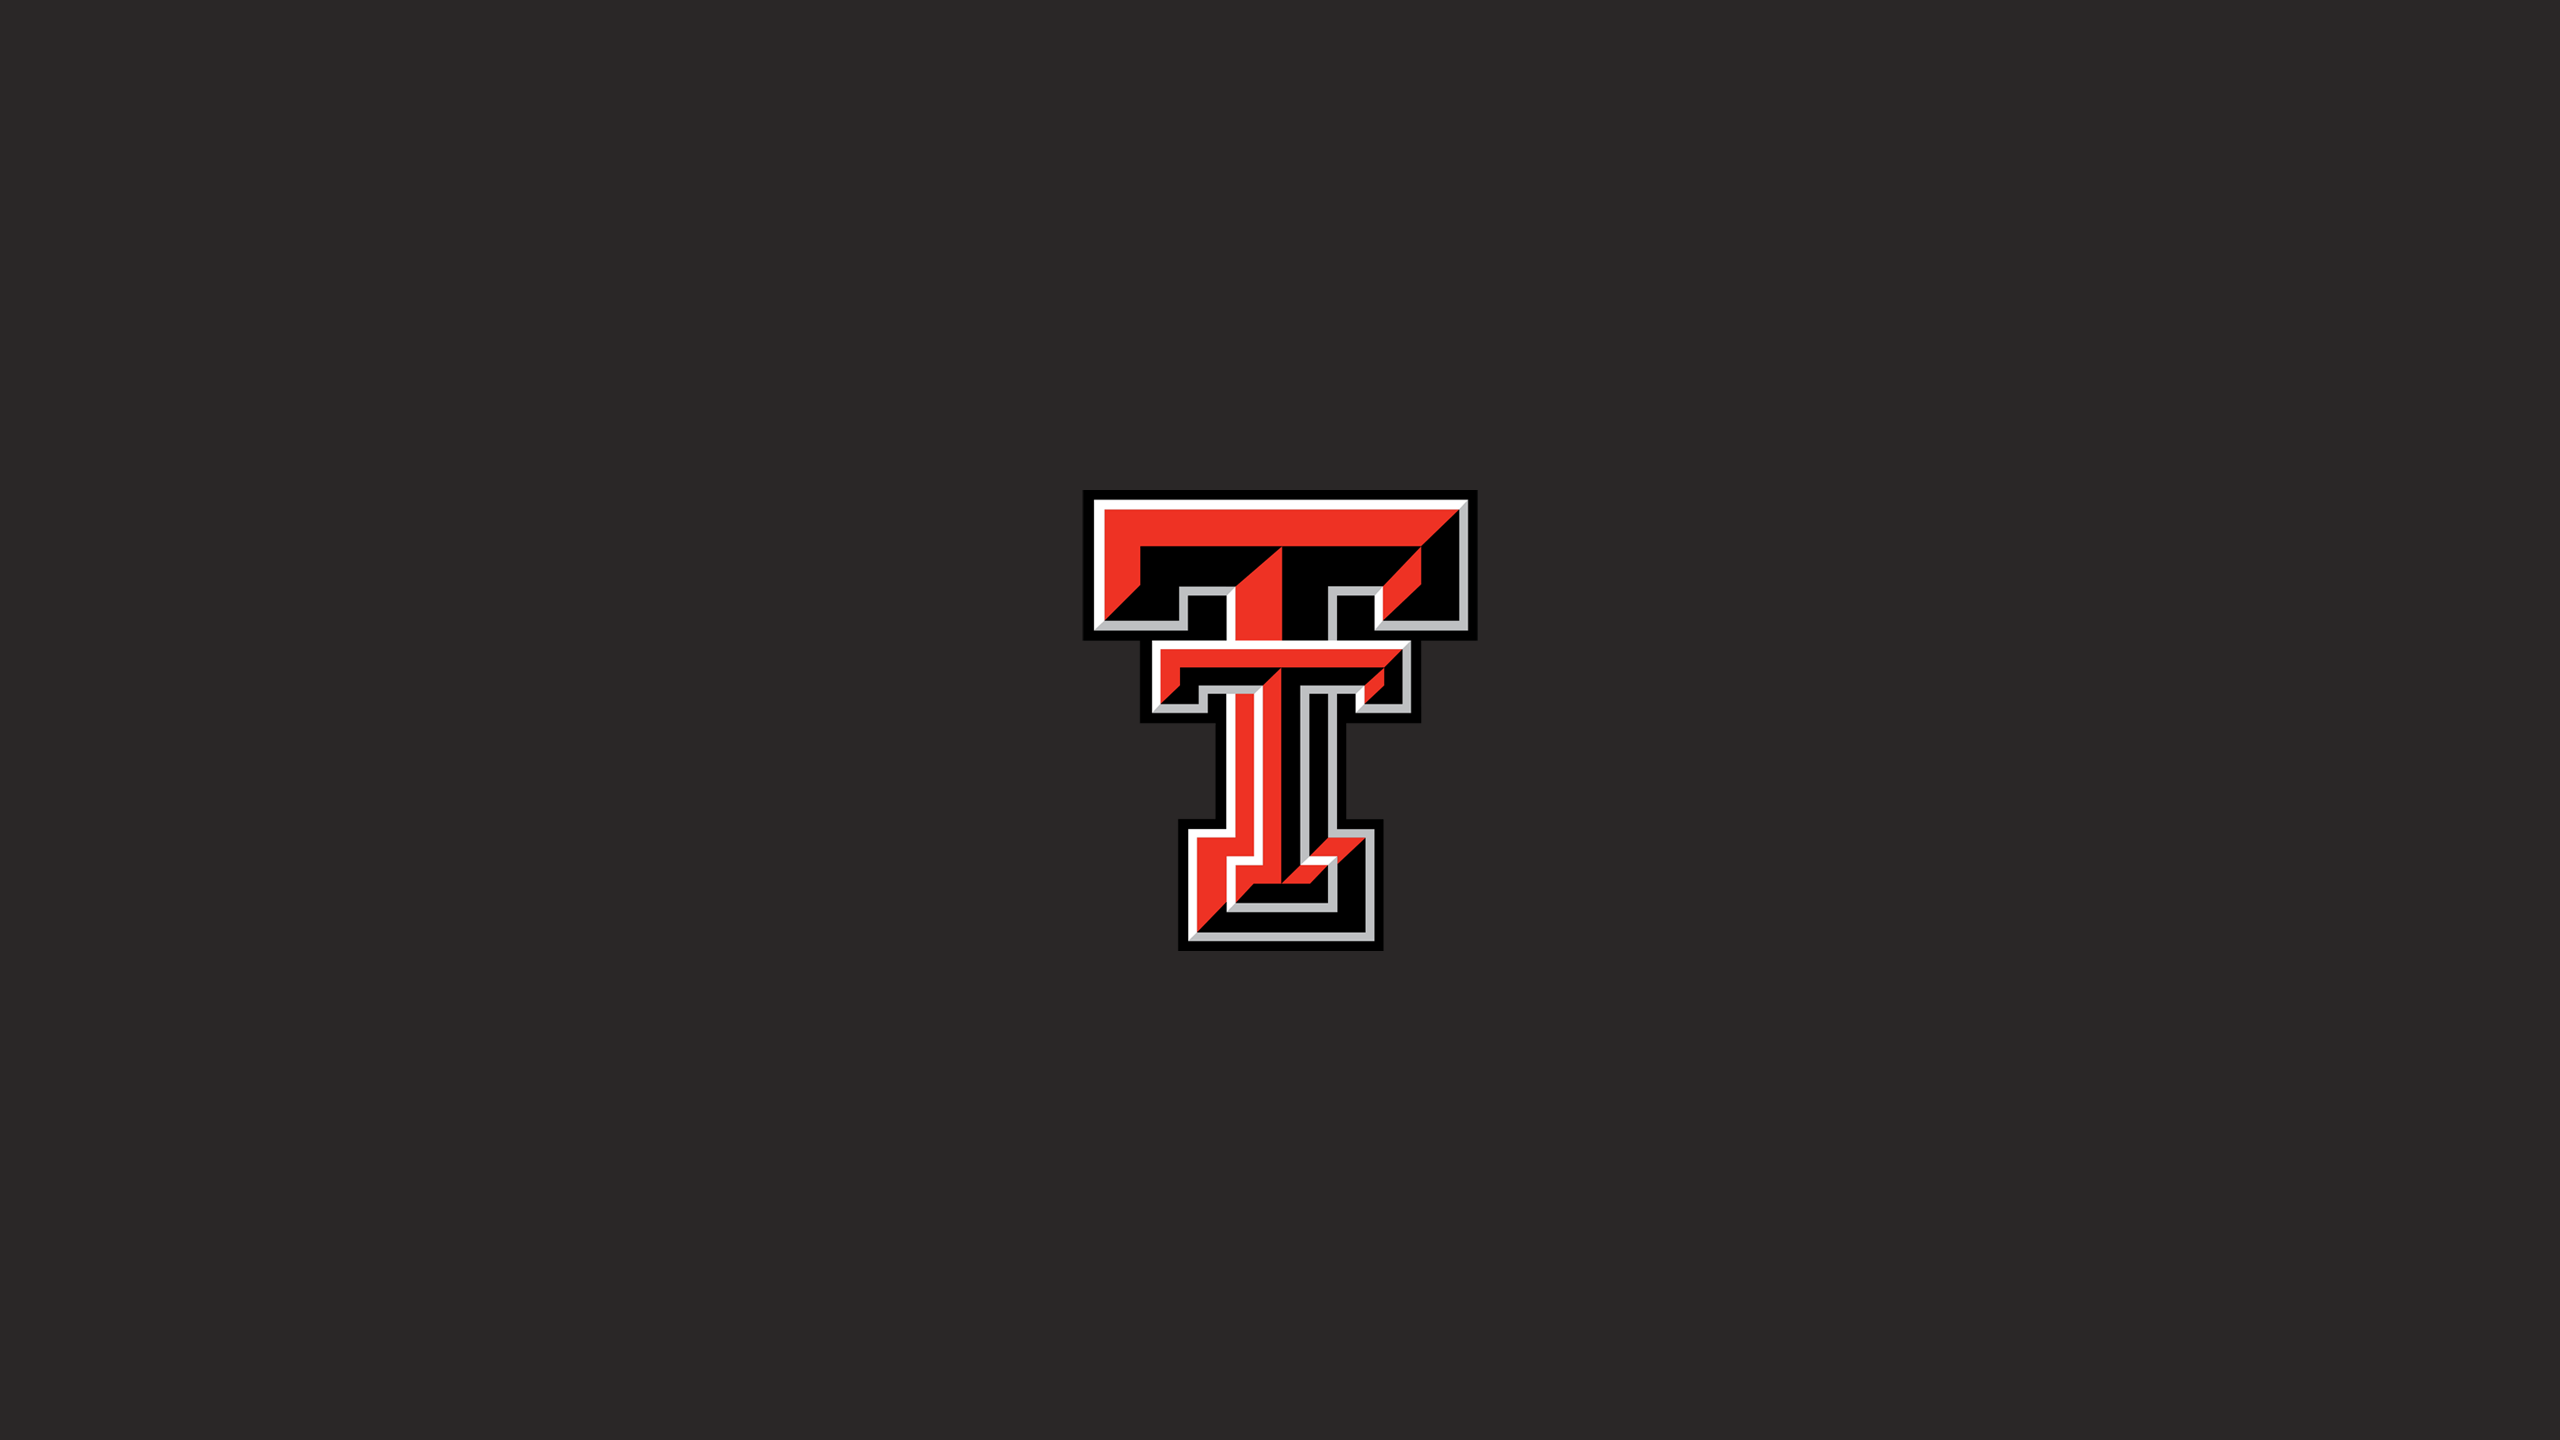 Texas Tech University Red Raiders. Stephen Clark (sgclark.com)